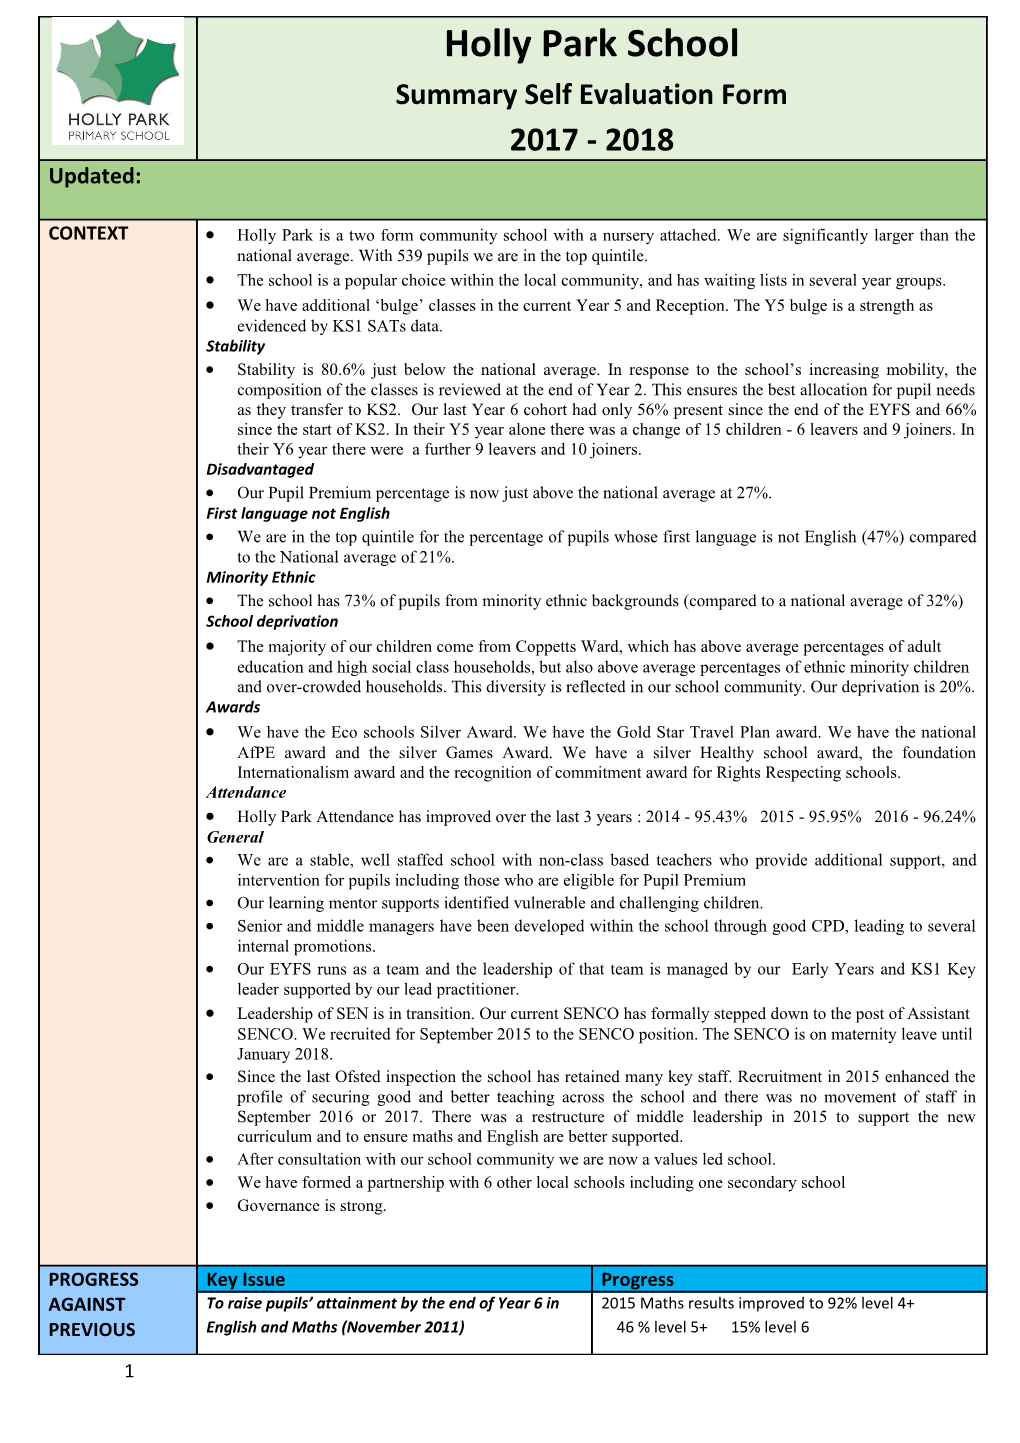 School Self-Evaluation Summary Sheet